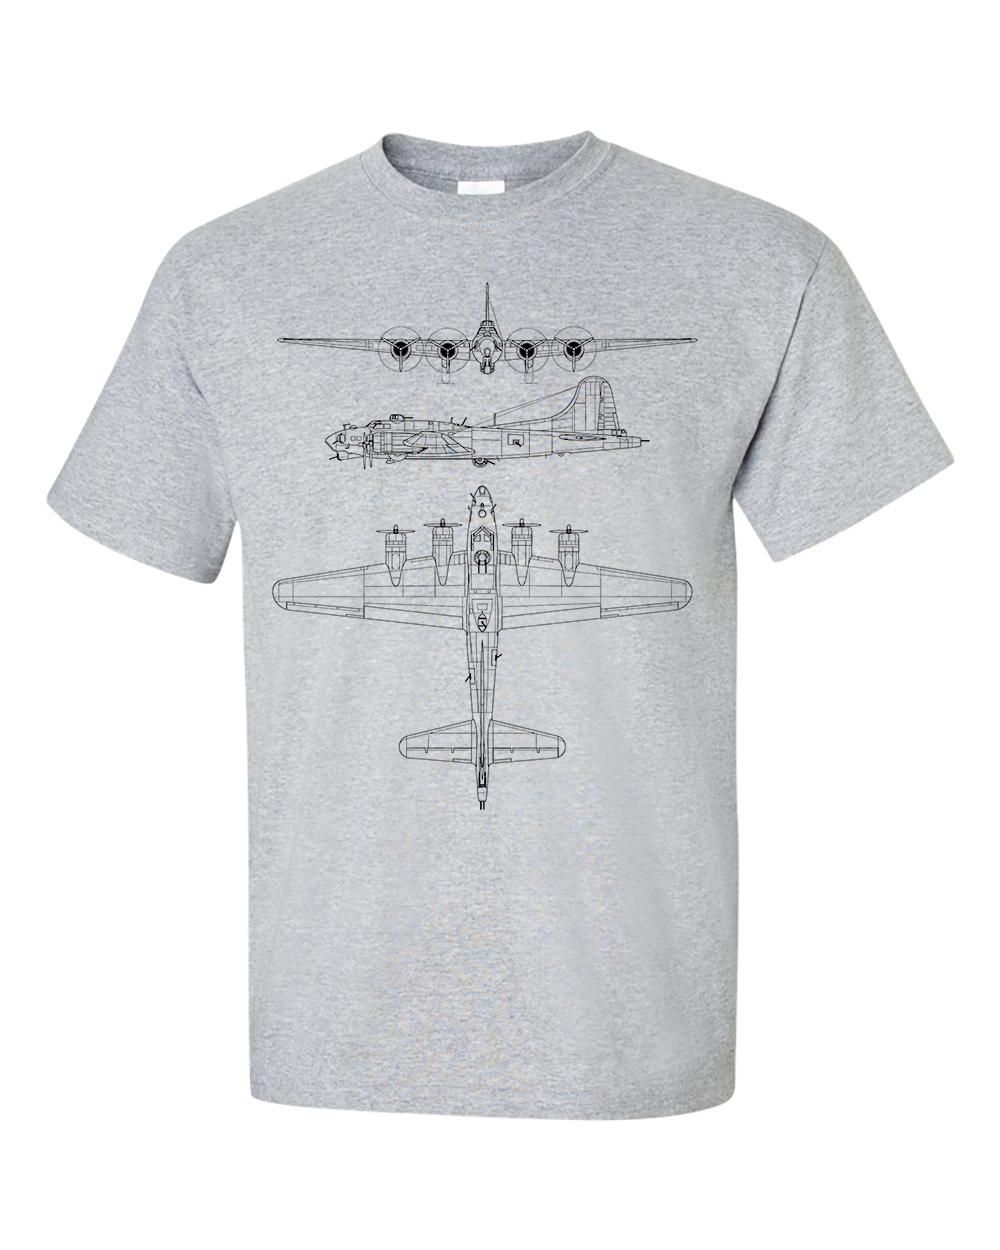 B-17 Flying Fortress T-Shirt Technical Drawing Blueprint Aircraft USAF WW2 Shirt